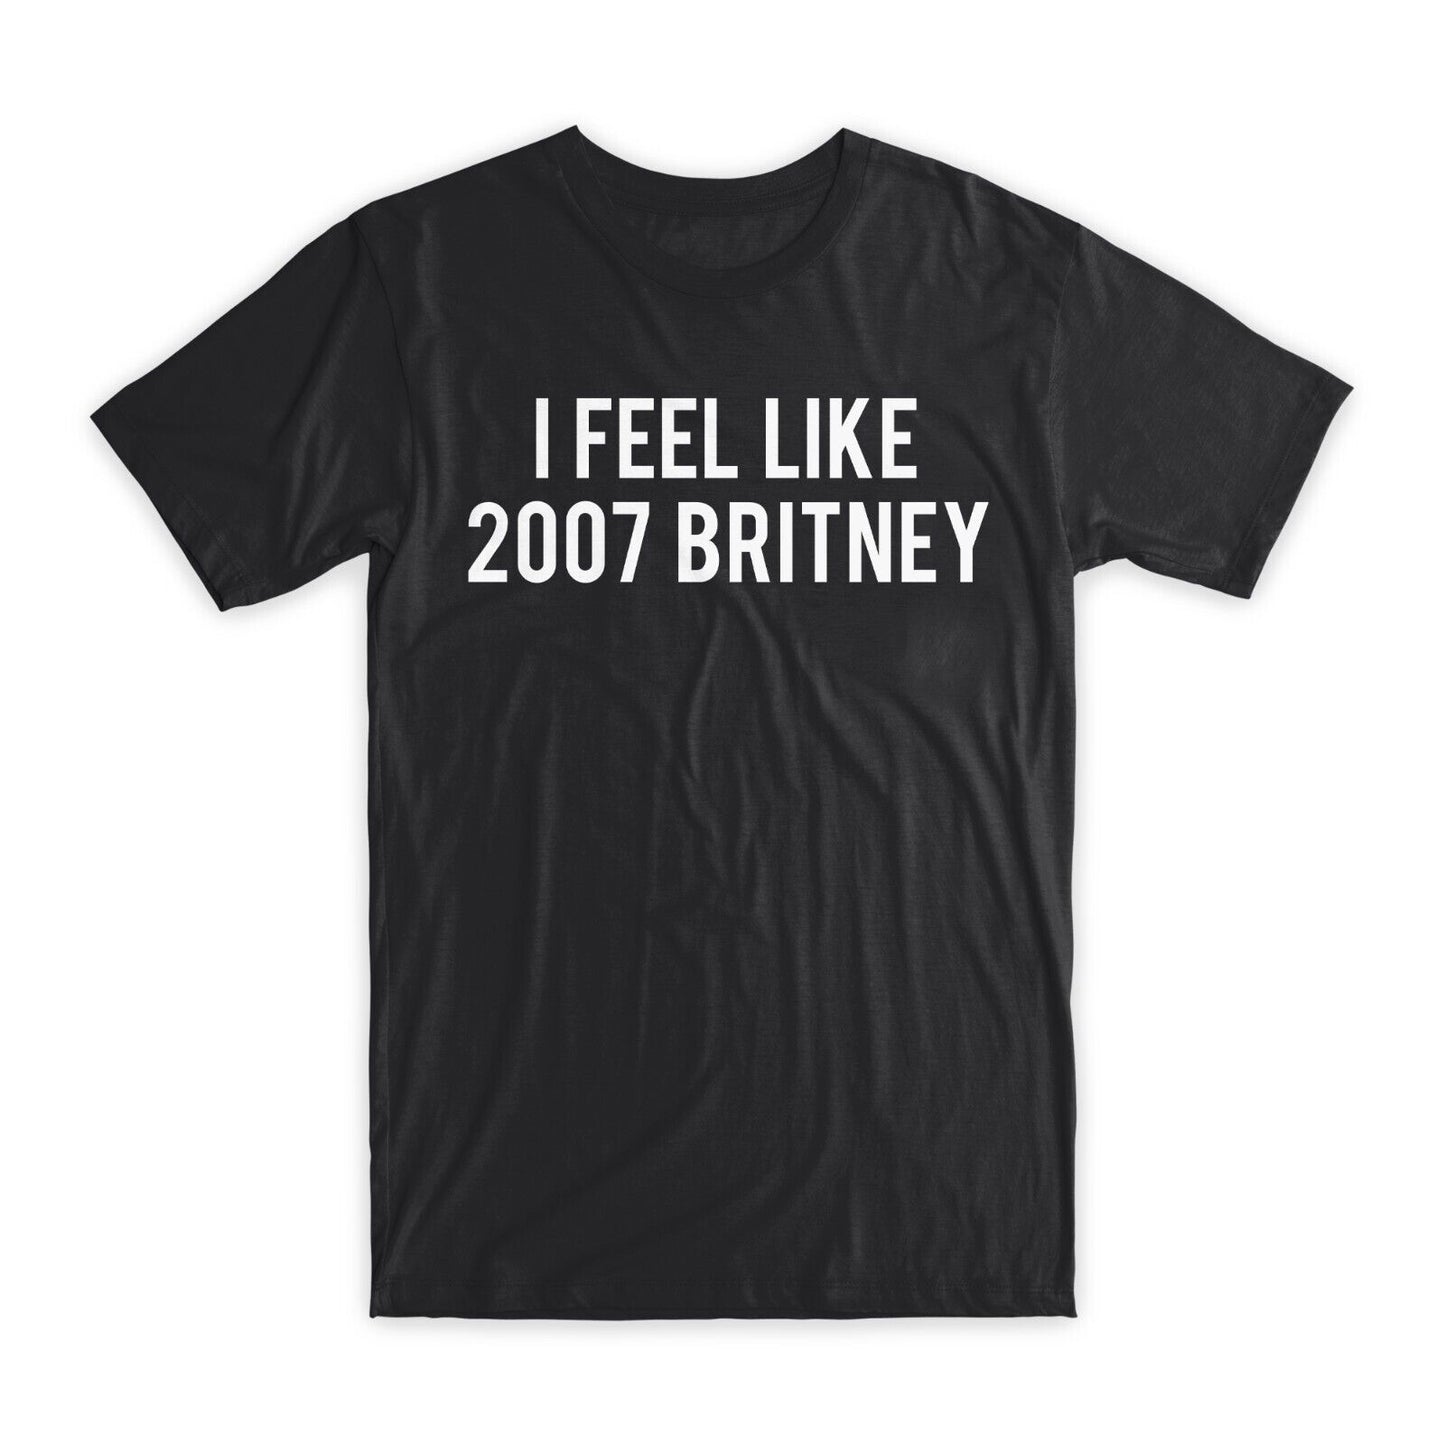 I Feel Like 2007 Britney T-Shirt Premium Soft Cotton Funny Tees Novelty Gift NEW